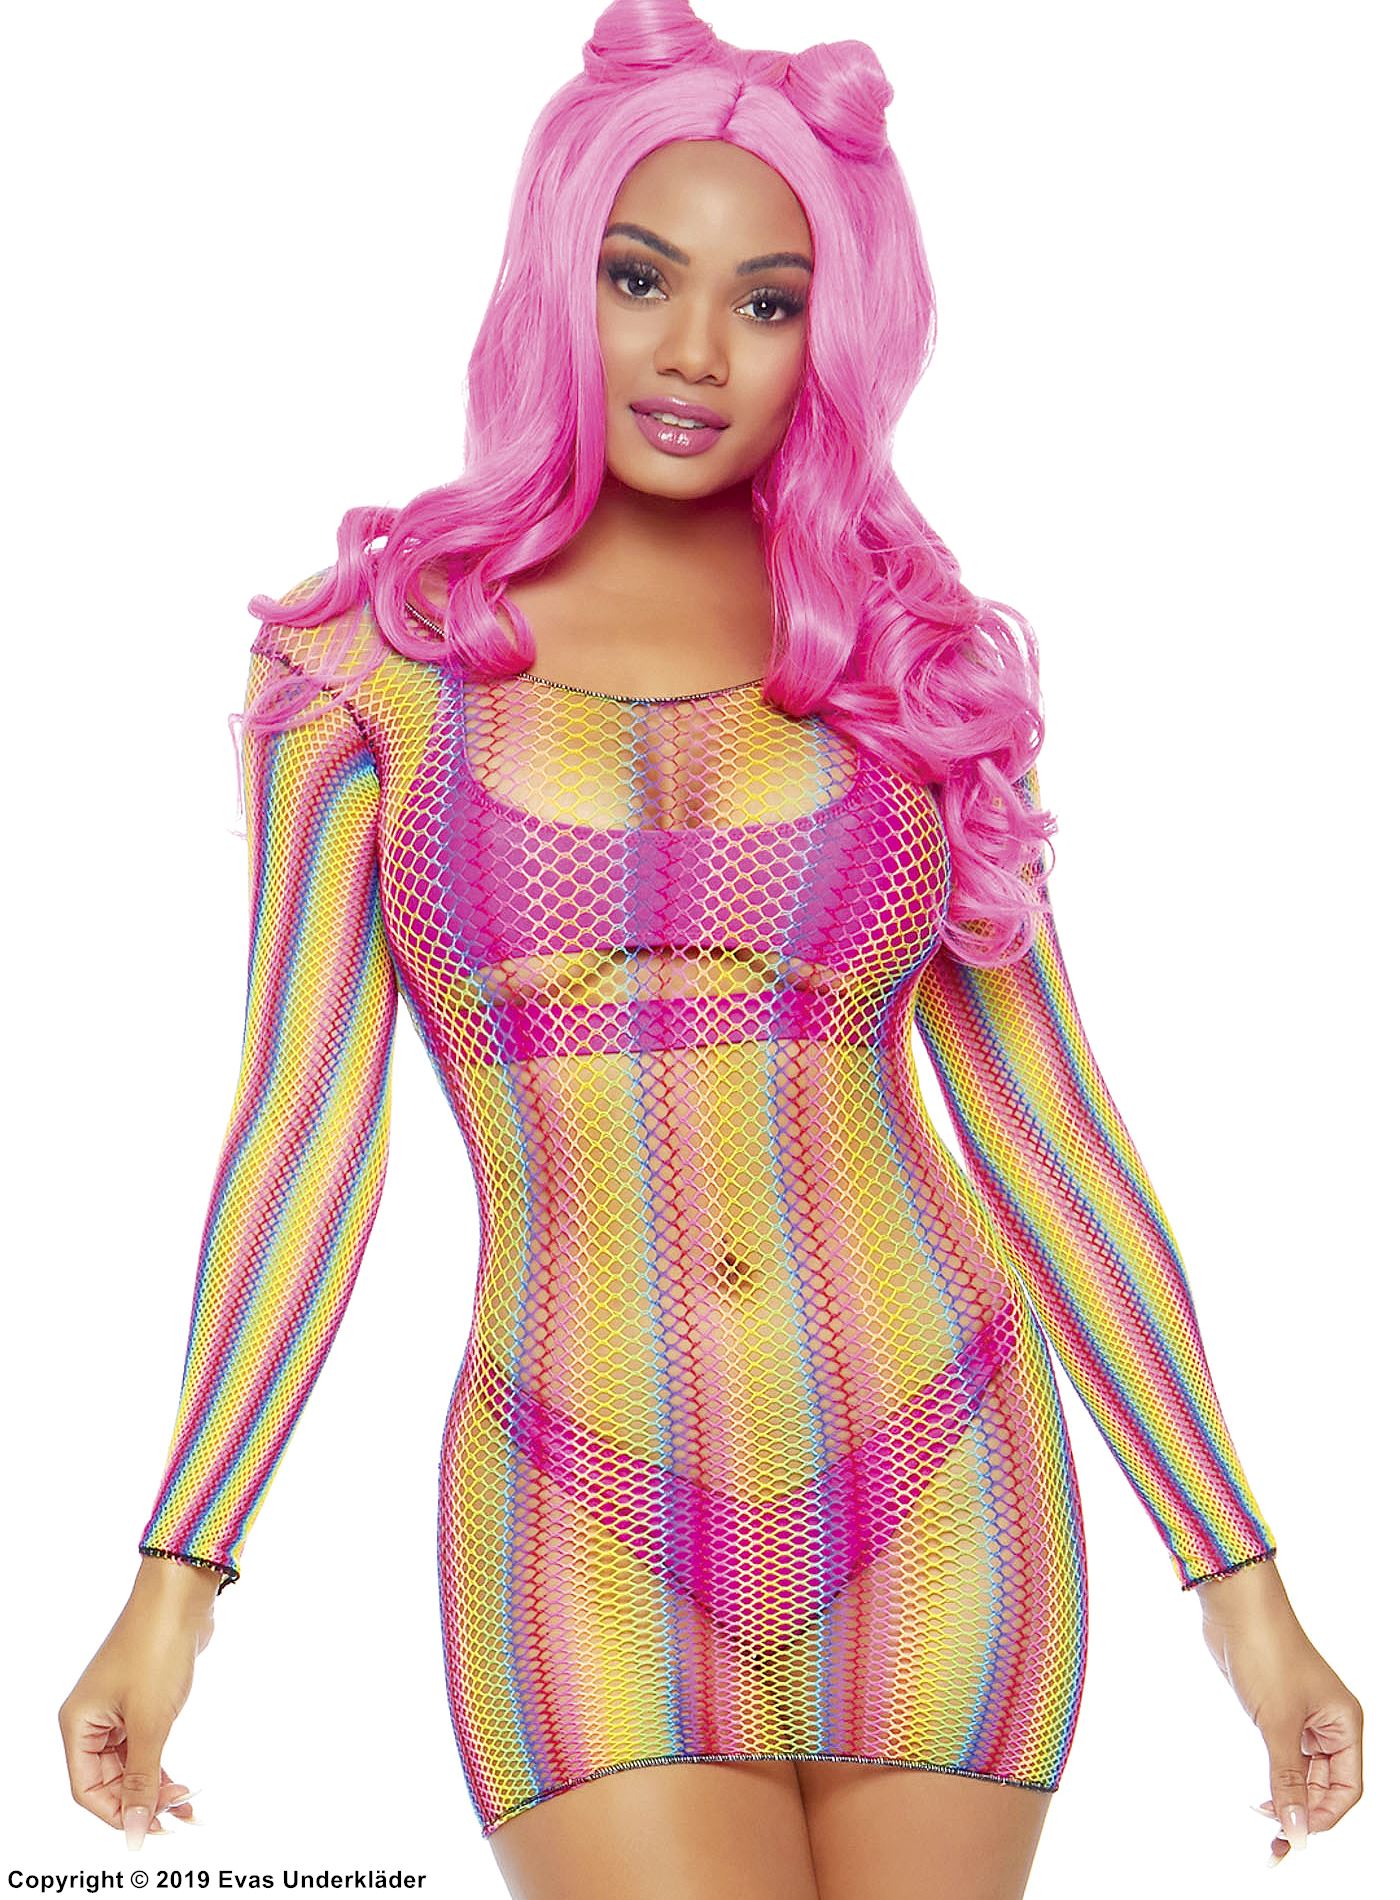 Night mini dress, fishnet, long sleeves, colorful stripes